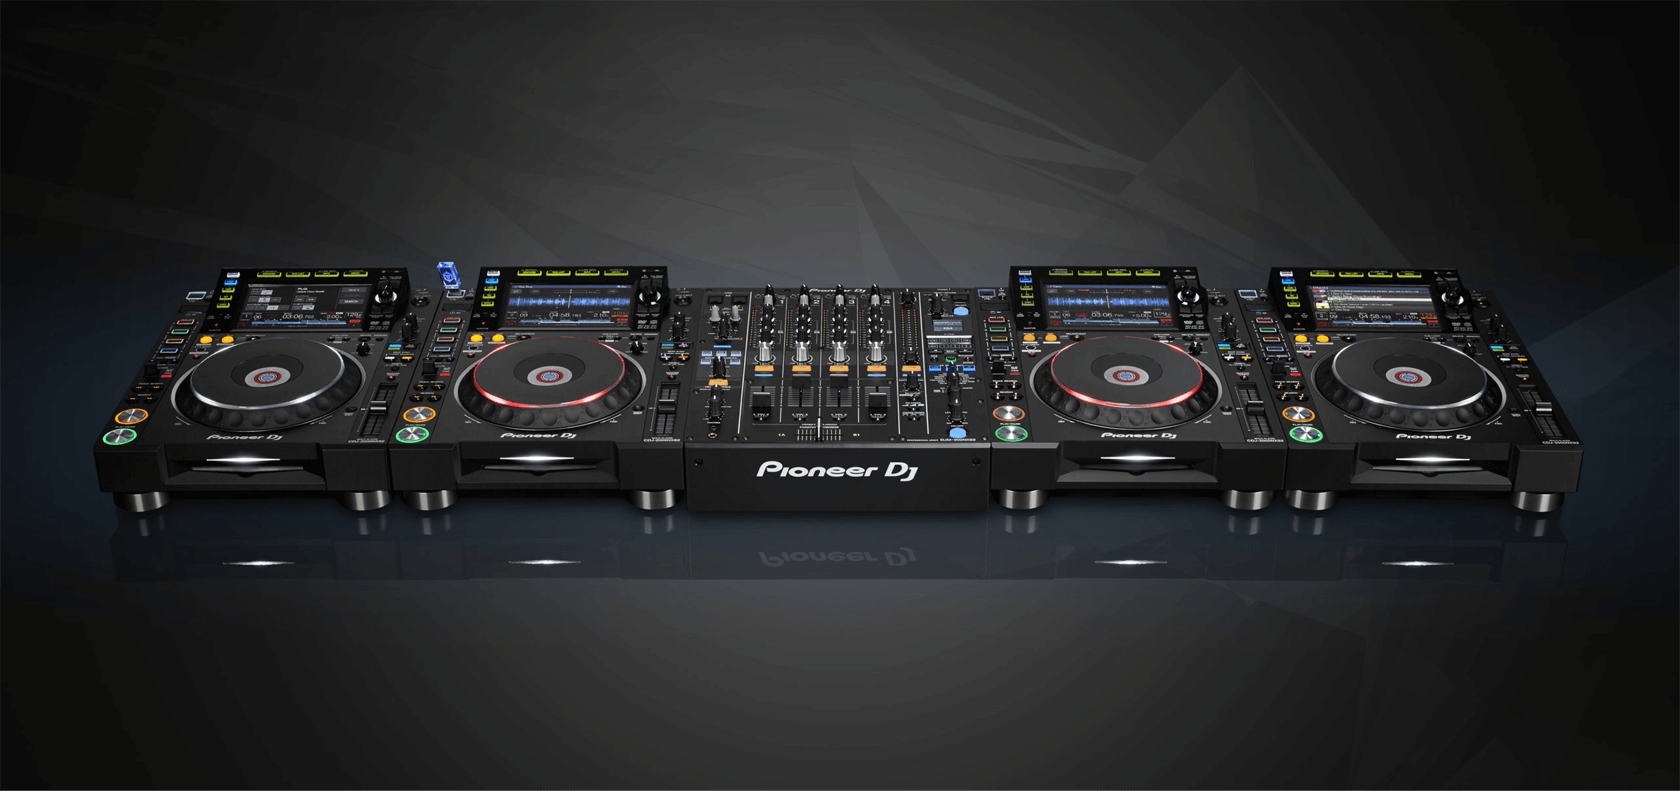 Pioneer CDJ 3000 Nexus. Пульт DJ Pioneer 2000. Pioneer CDJ 2000 4 Deck. Pioneer DJ CDJ-3000. Dj set 2023